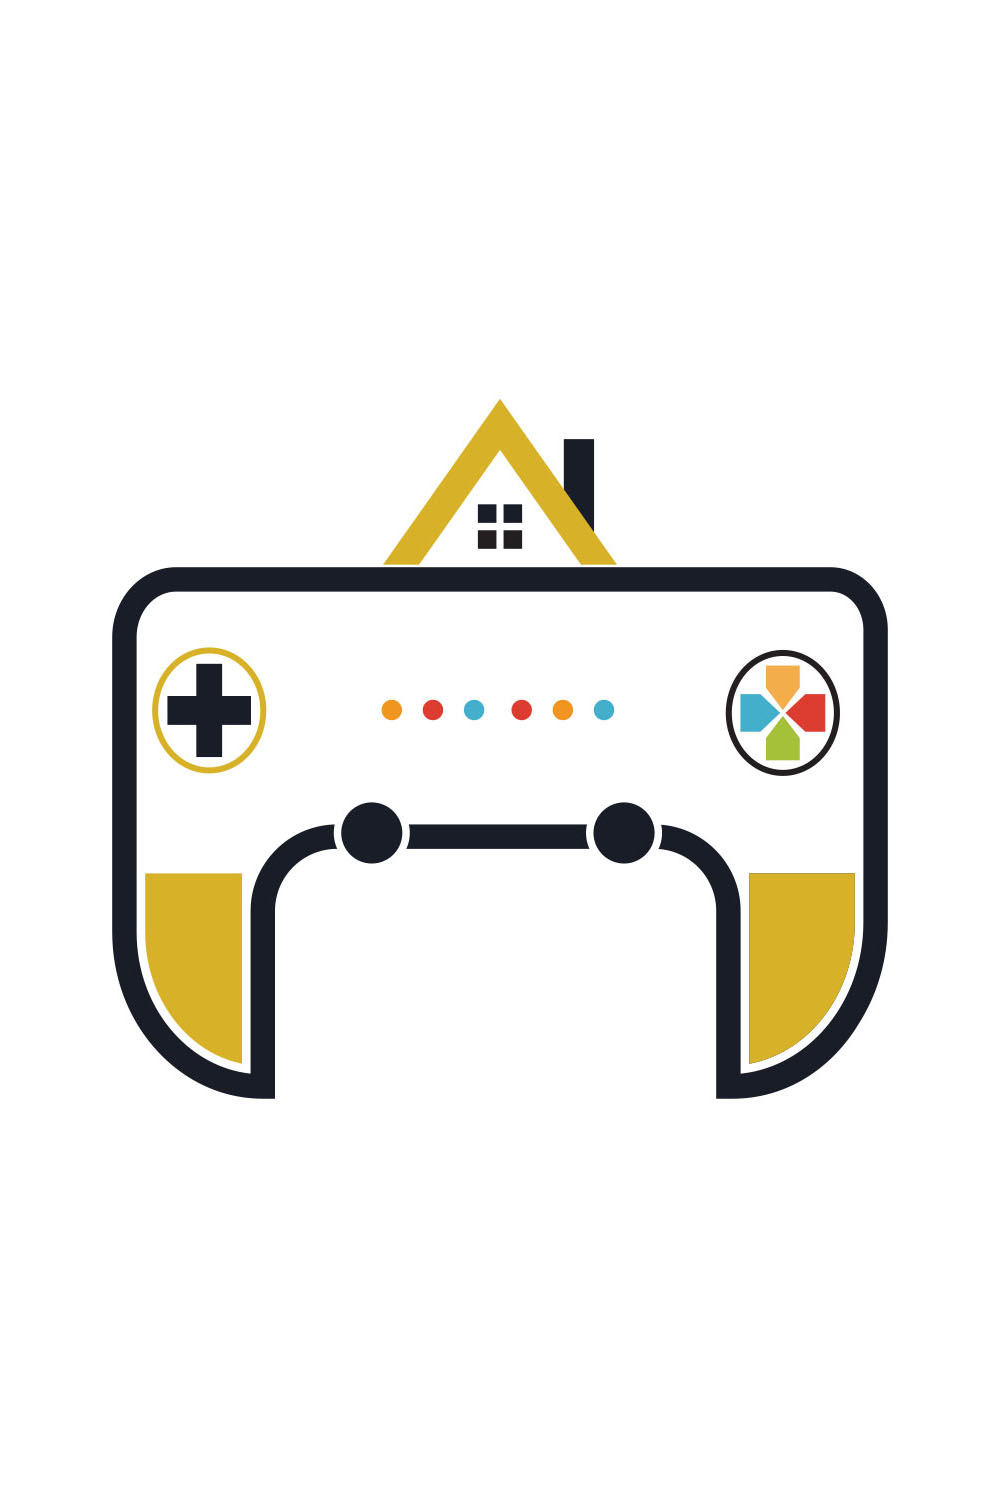 Gaming House Logo Pinterest image.